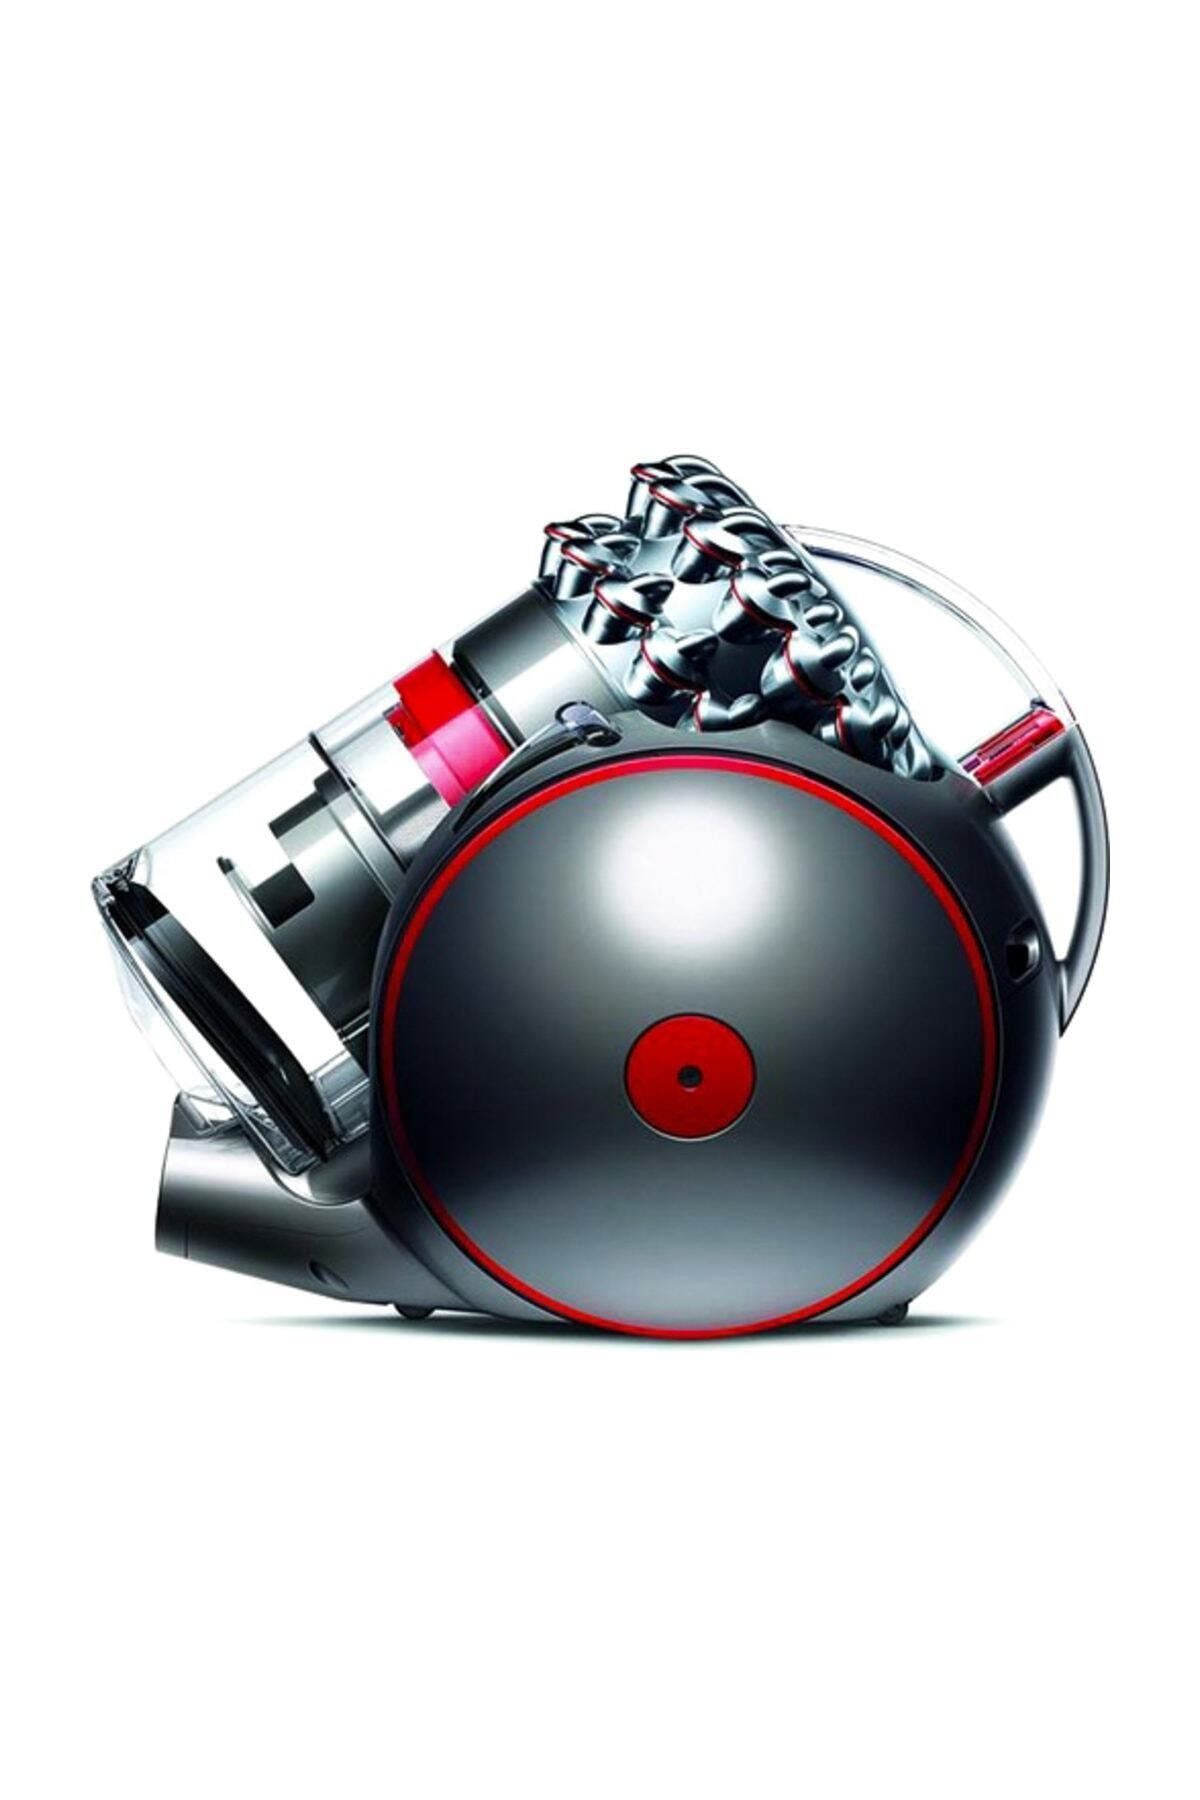 DYSON Cinetic Big Ball Animal Pro 2 Toz Torbasız Elektrikli Süpürge